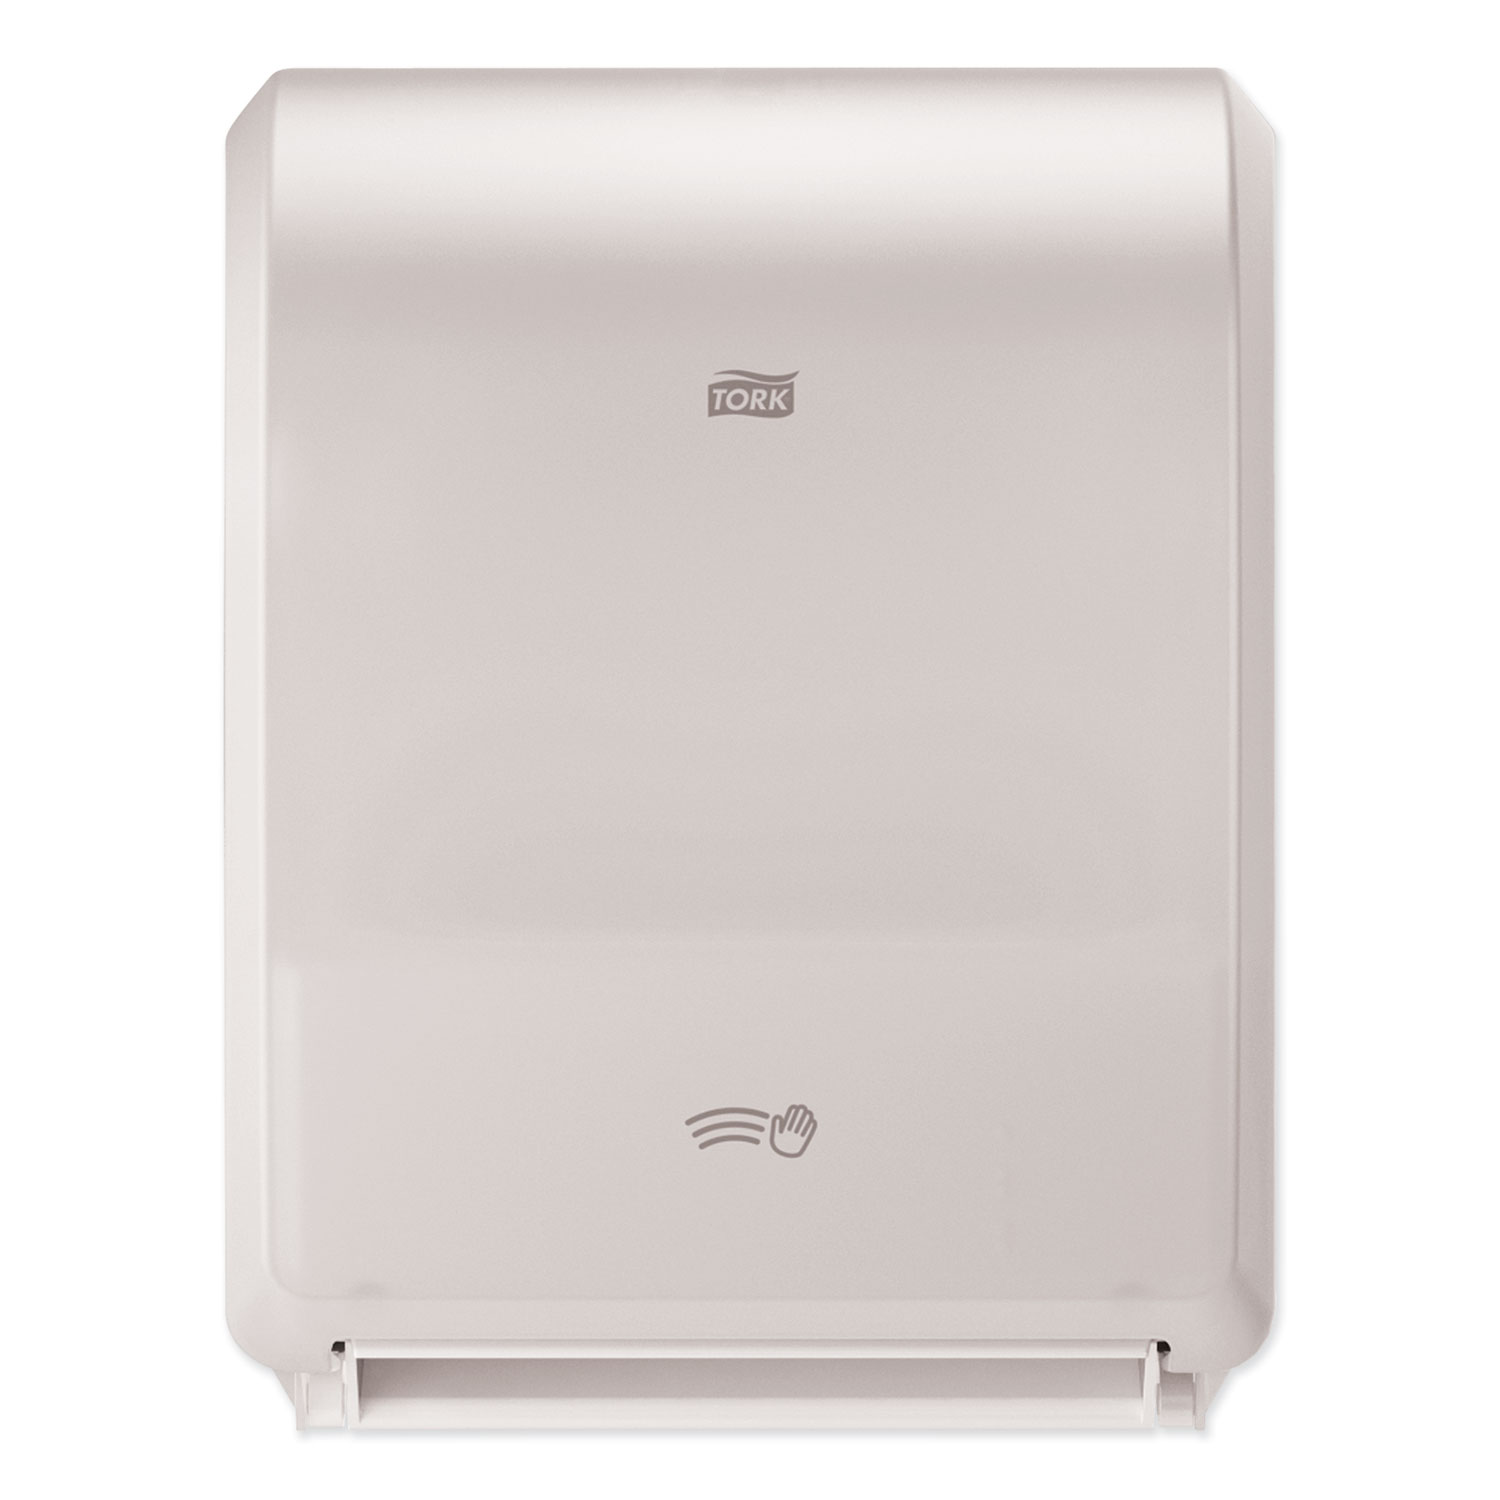  Tork 771720 Electronic Hand Towel Roll Dispenser, 12.32 x 15.95 x 9.32,White,7.5 Roll, 1/Carton (TRK771720) 